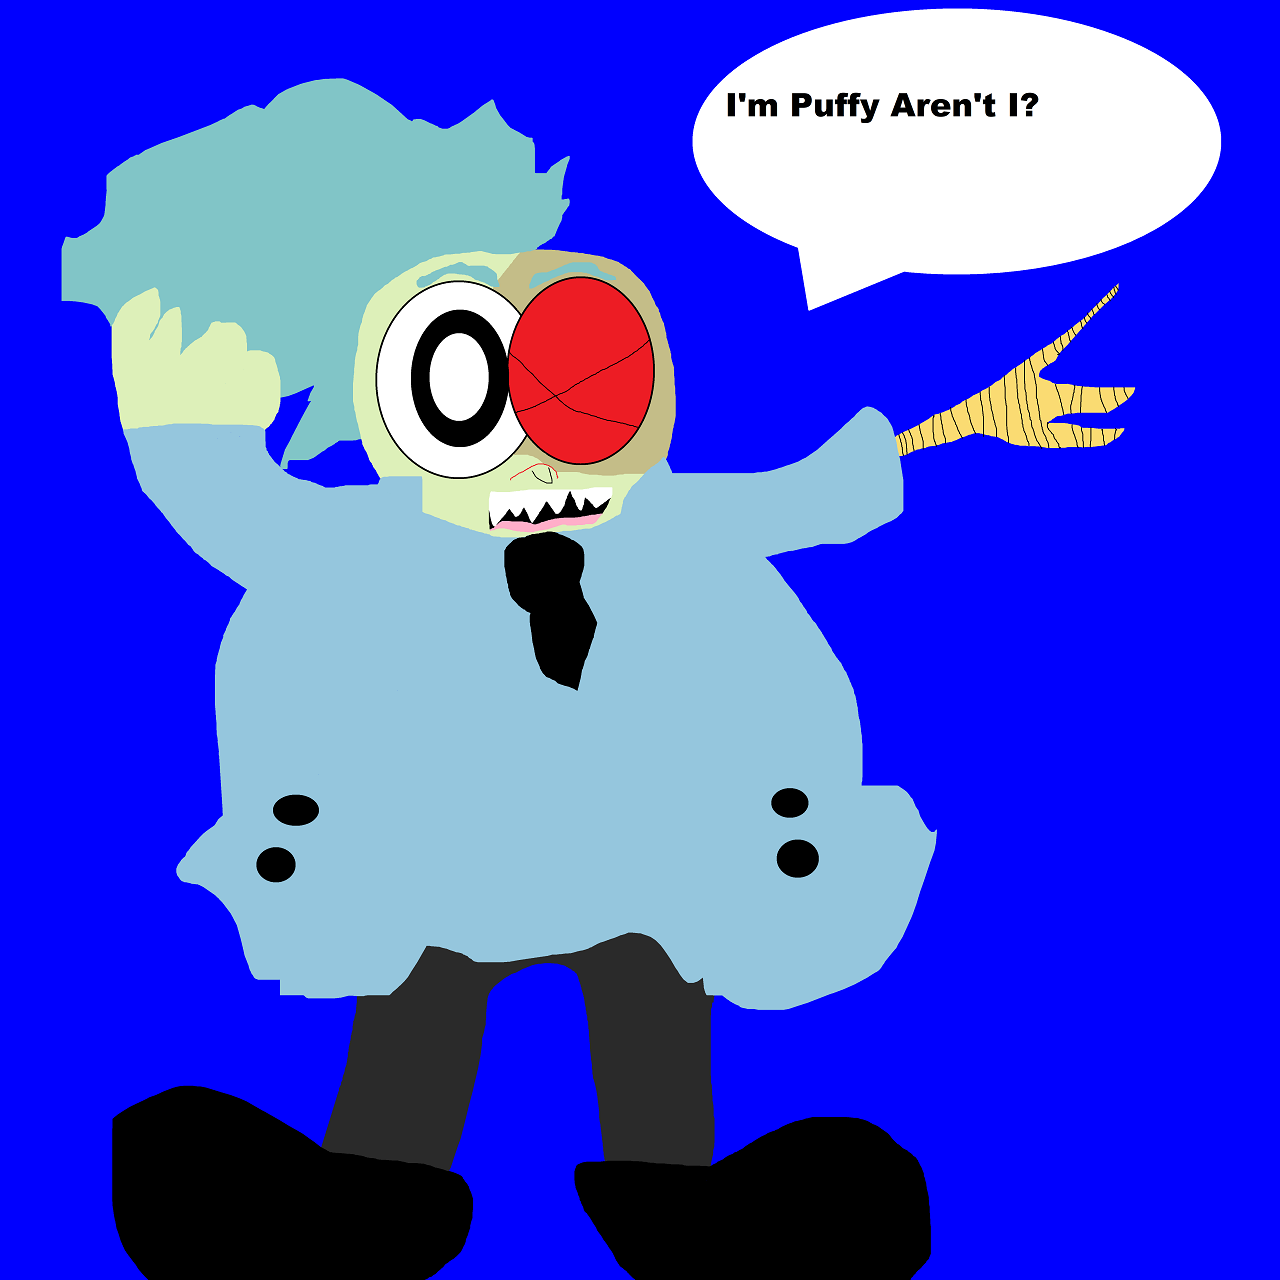 I'm Puffy Aren't I? by Falconlobo